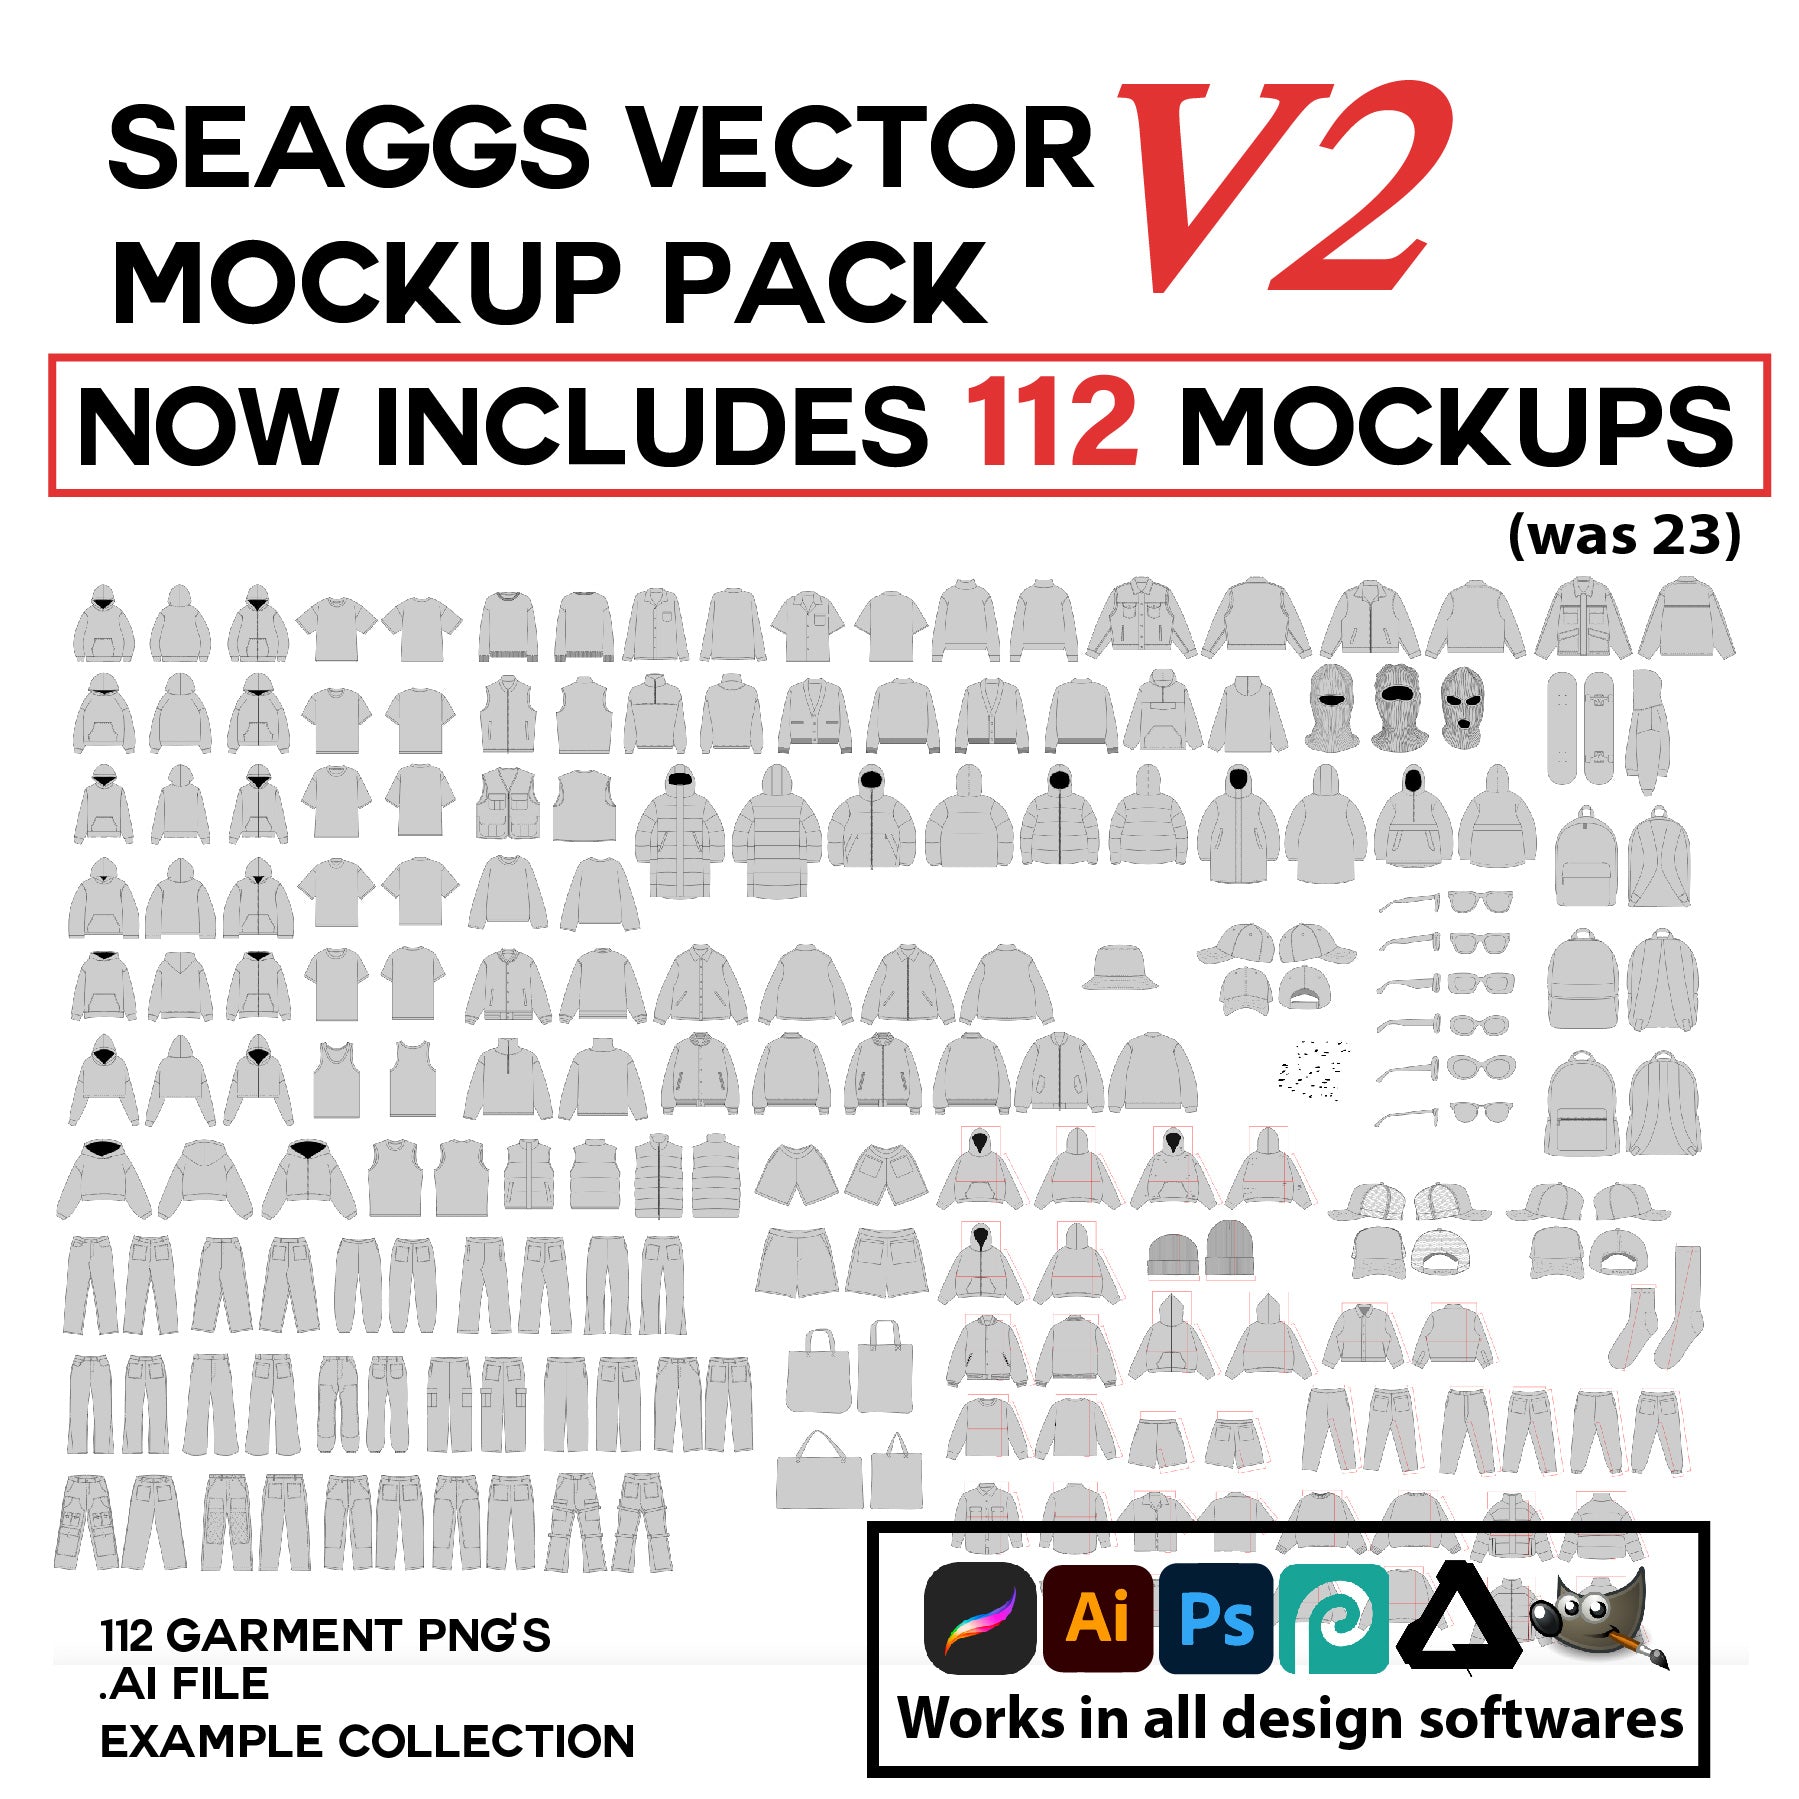 Seaggs Vector Mockup Pack V2